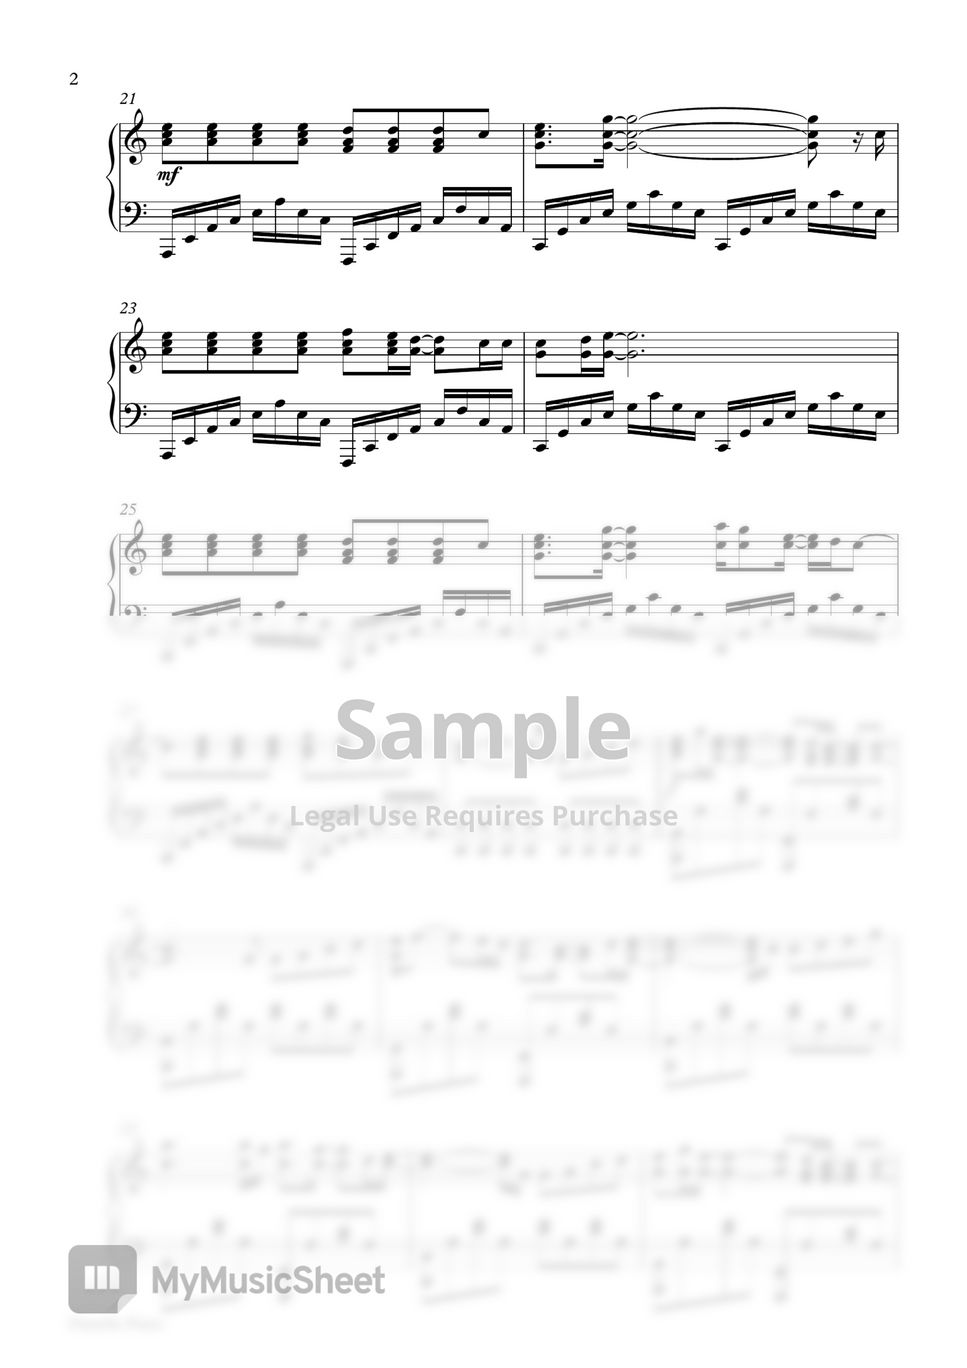 Ed Sheeran - Happier (Piano Sheet) by Pianella Piano